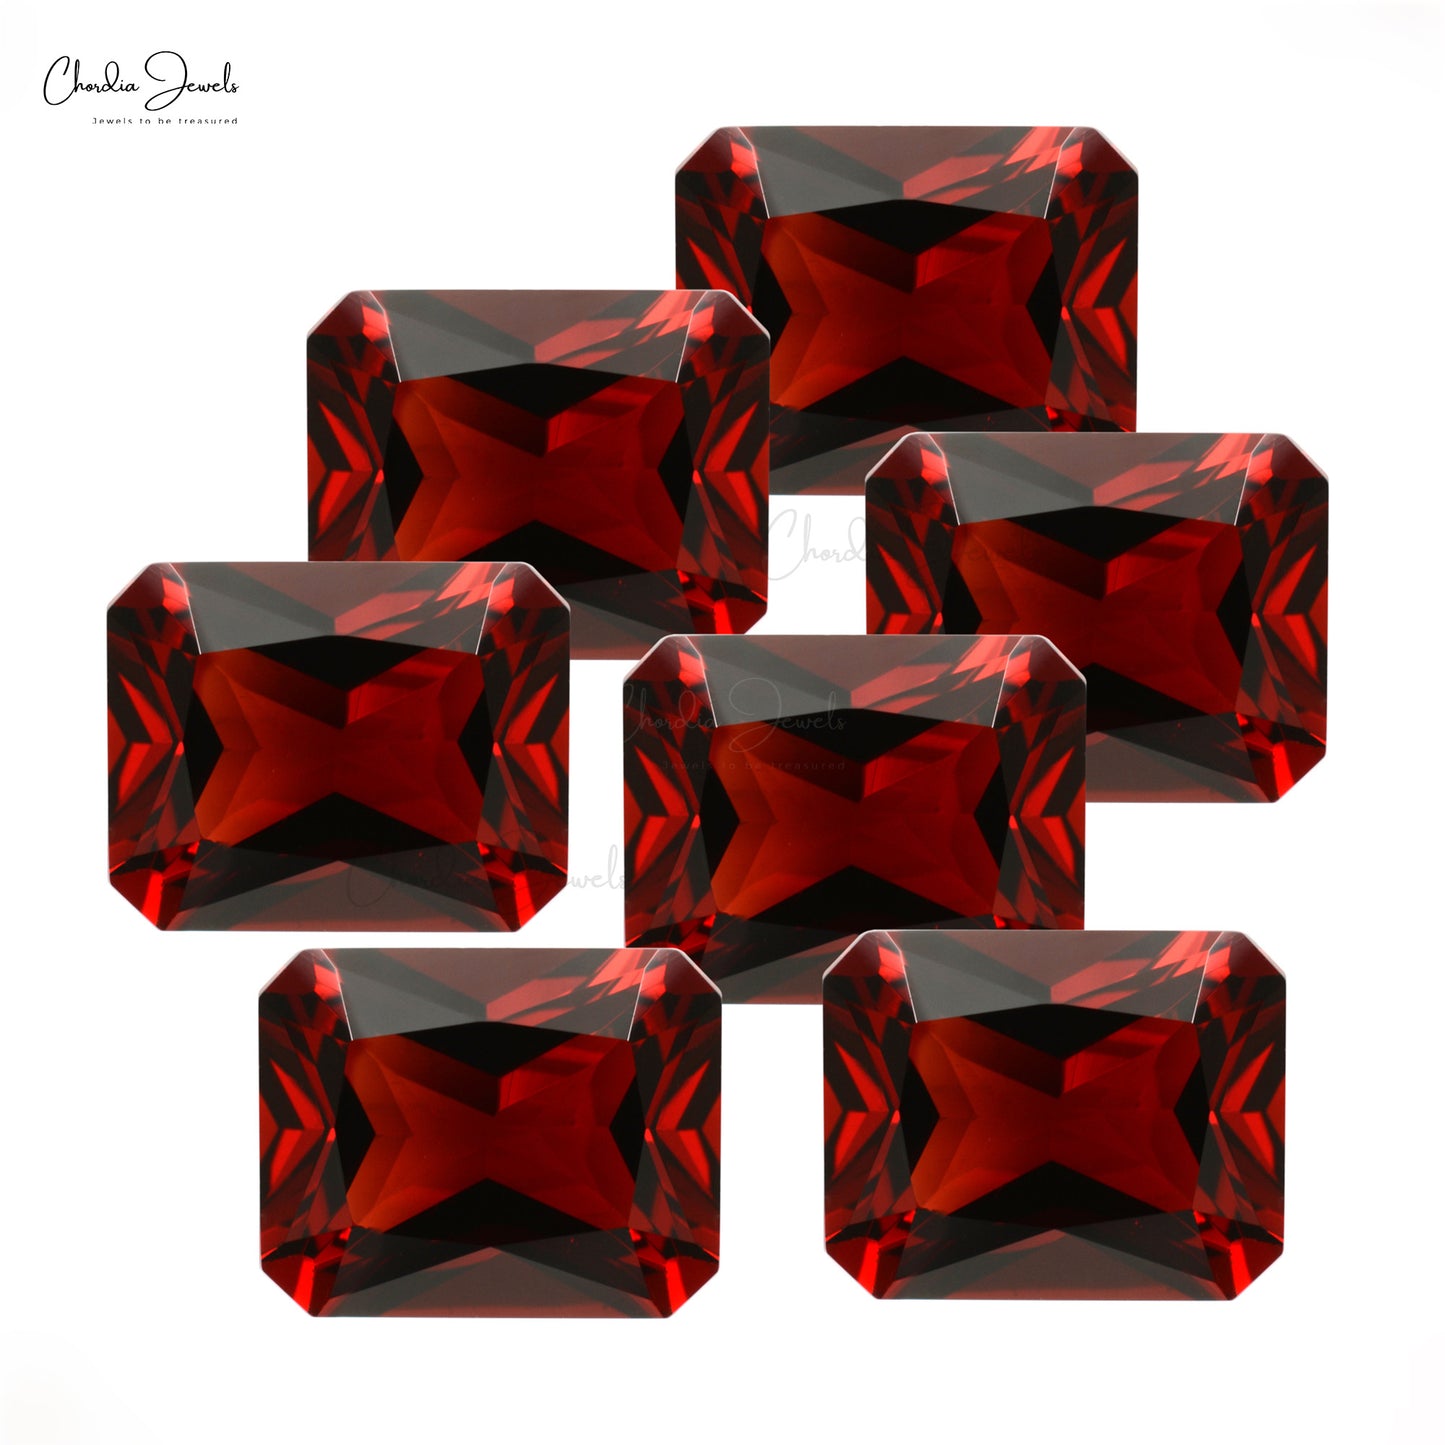 3 Carat Genuine Octagon Faceted Garnet Gemstone for Jewelry Making, 1 Piece